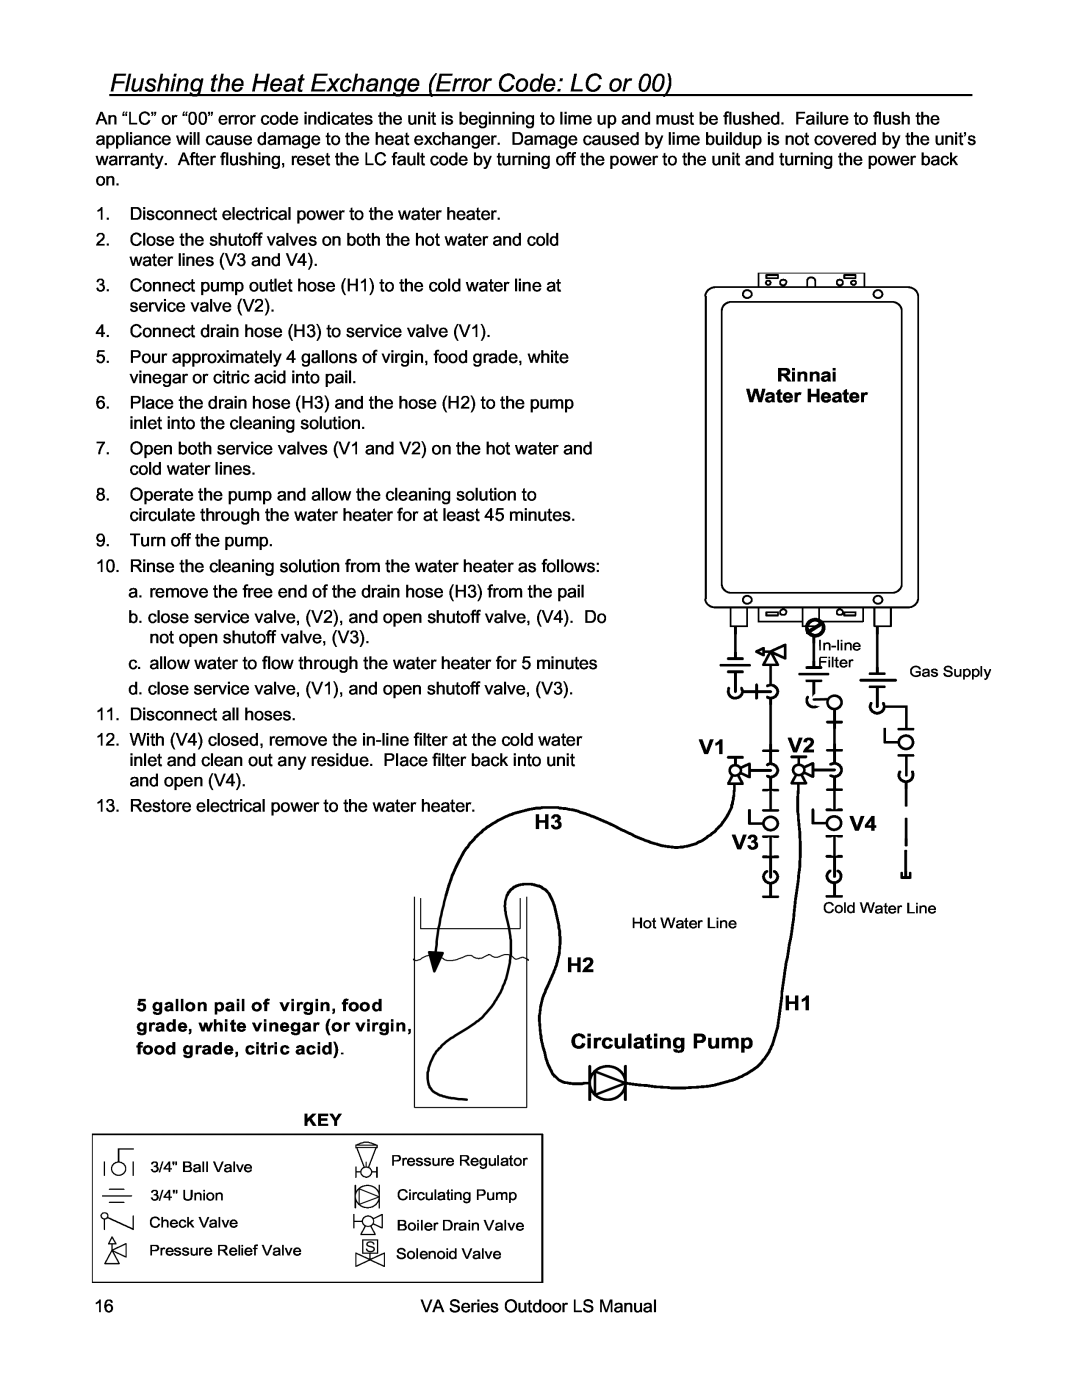 Rinnai R63LSE2 Flushing the Heat Exchange Error Code LC or, V1, H2 H1 Circulating Pump, Rinnai Water Heater 